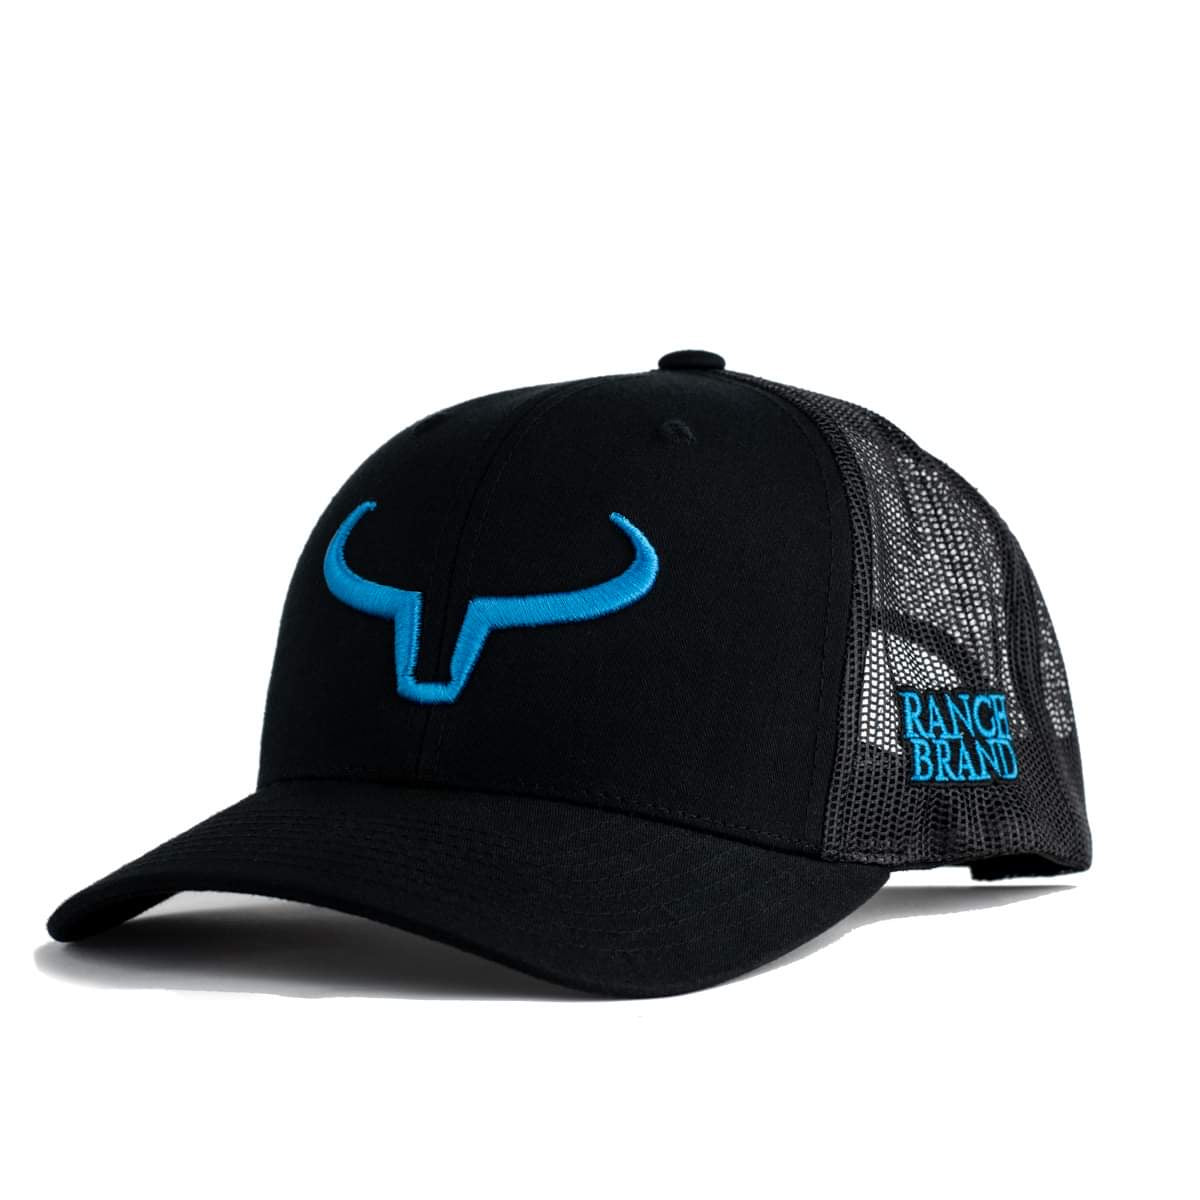 Vapor Back Country Hat - Blue with Black Trim